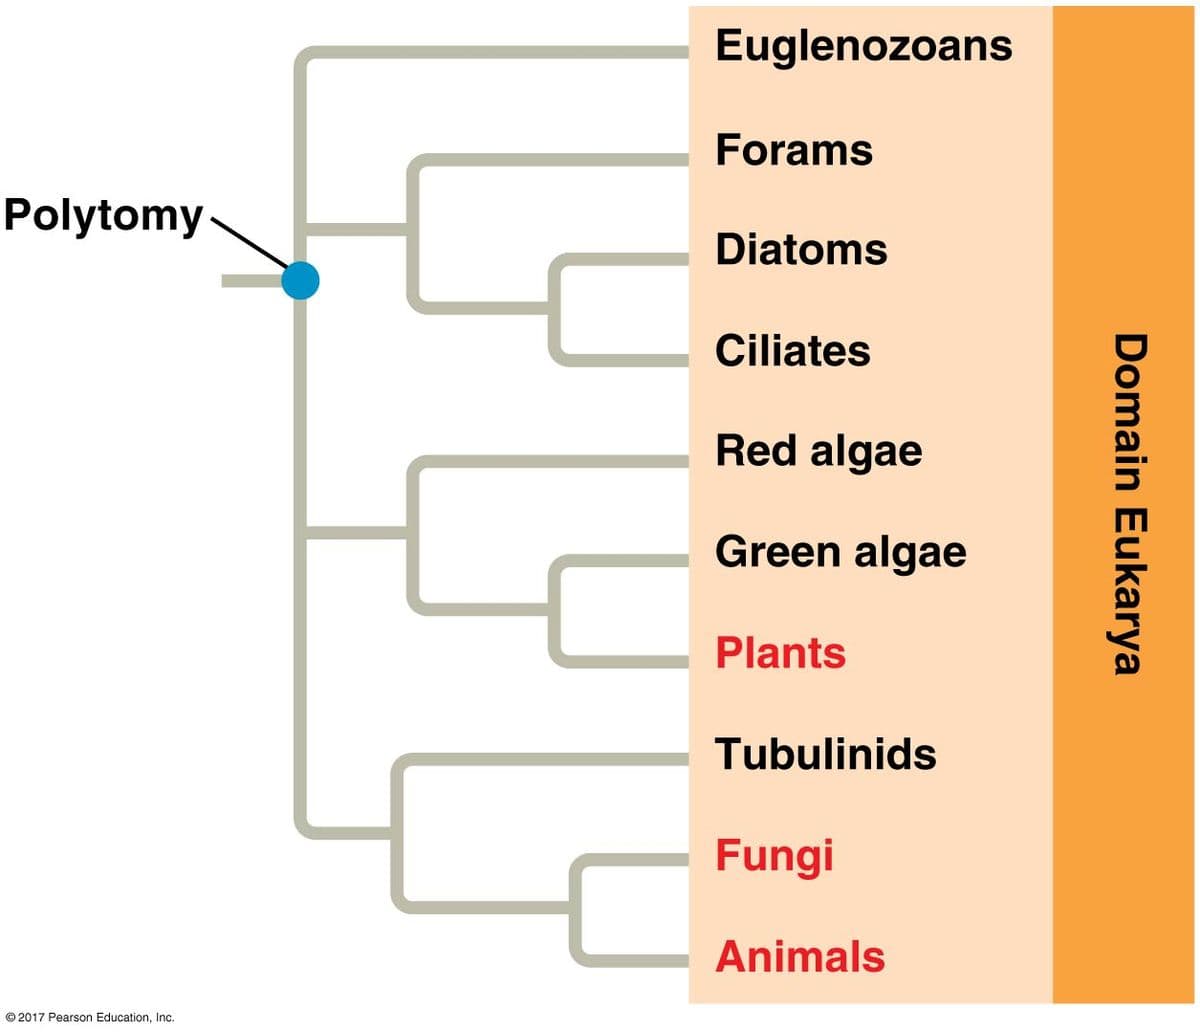 Polytomy
© 2017 Pearson Education, Inc.
Euglenozoans
Forams
Diatoms
Ciliates
Red algae
Green algae
Plants
Tubulinids
Fungi
Animals
Domain Eukarya